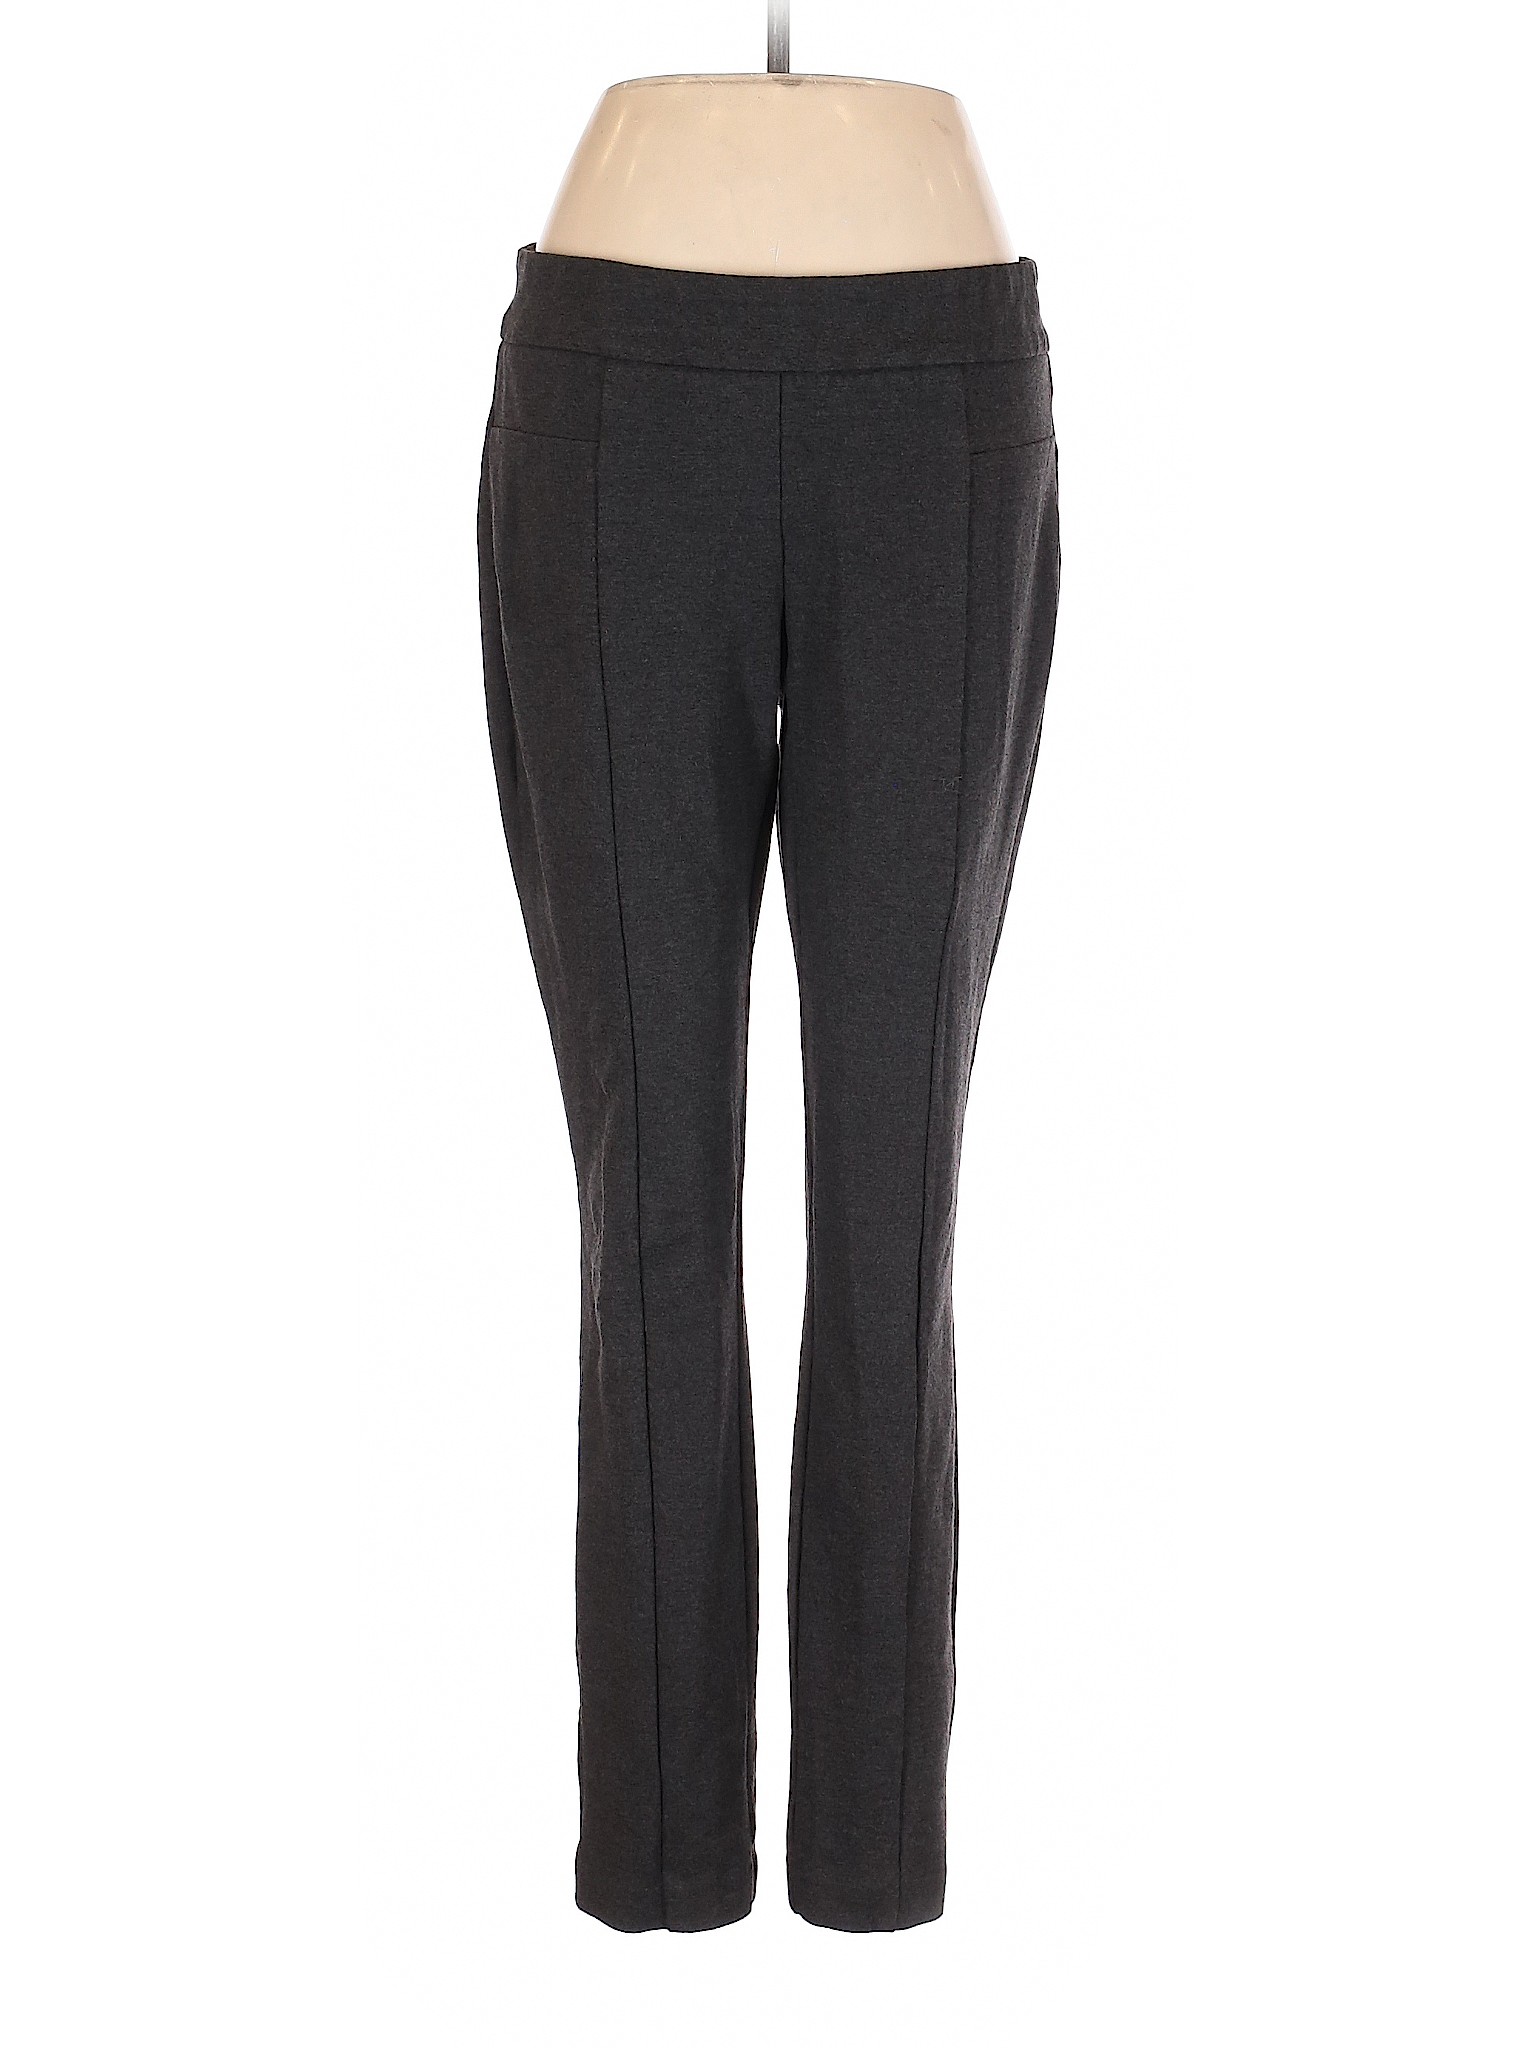 Hilary Radley Women Gray Dress Pants M | eBay